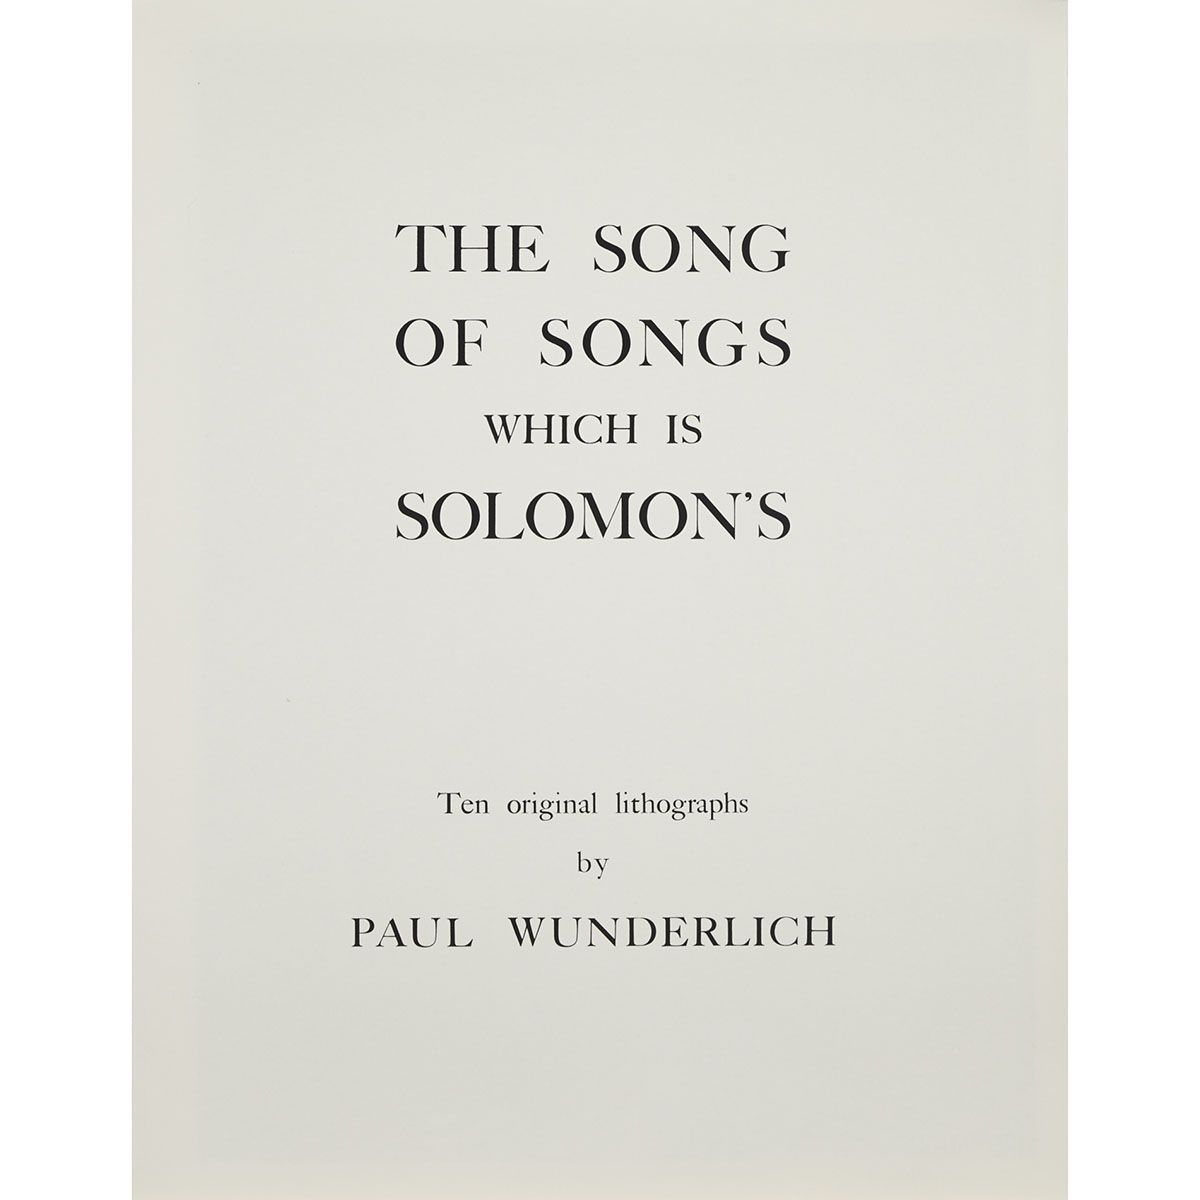 Paul Wunderlich (1927-2010)